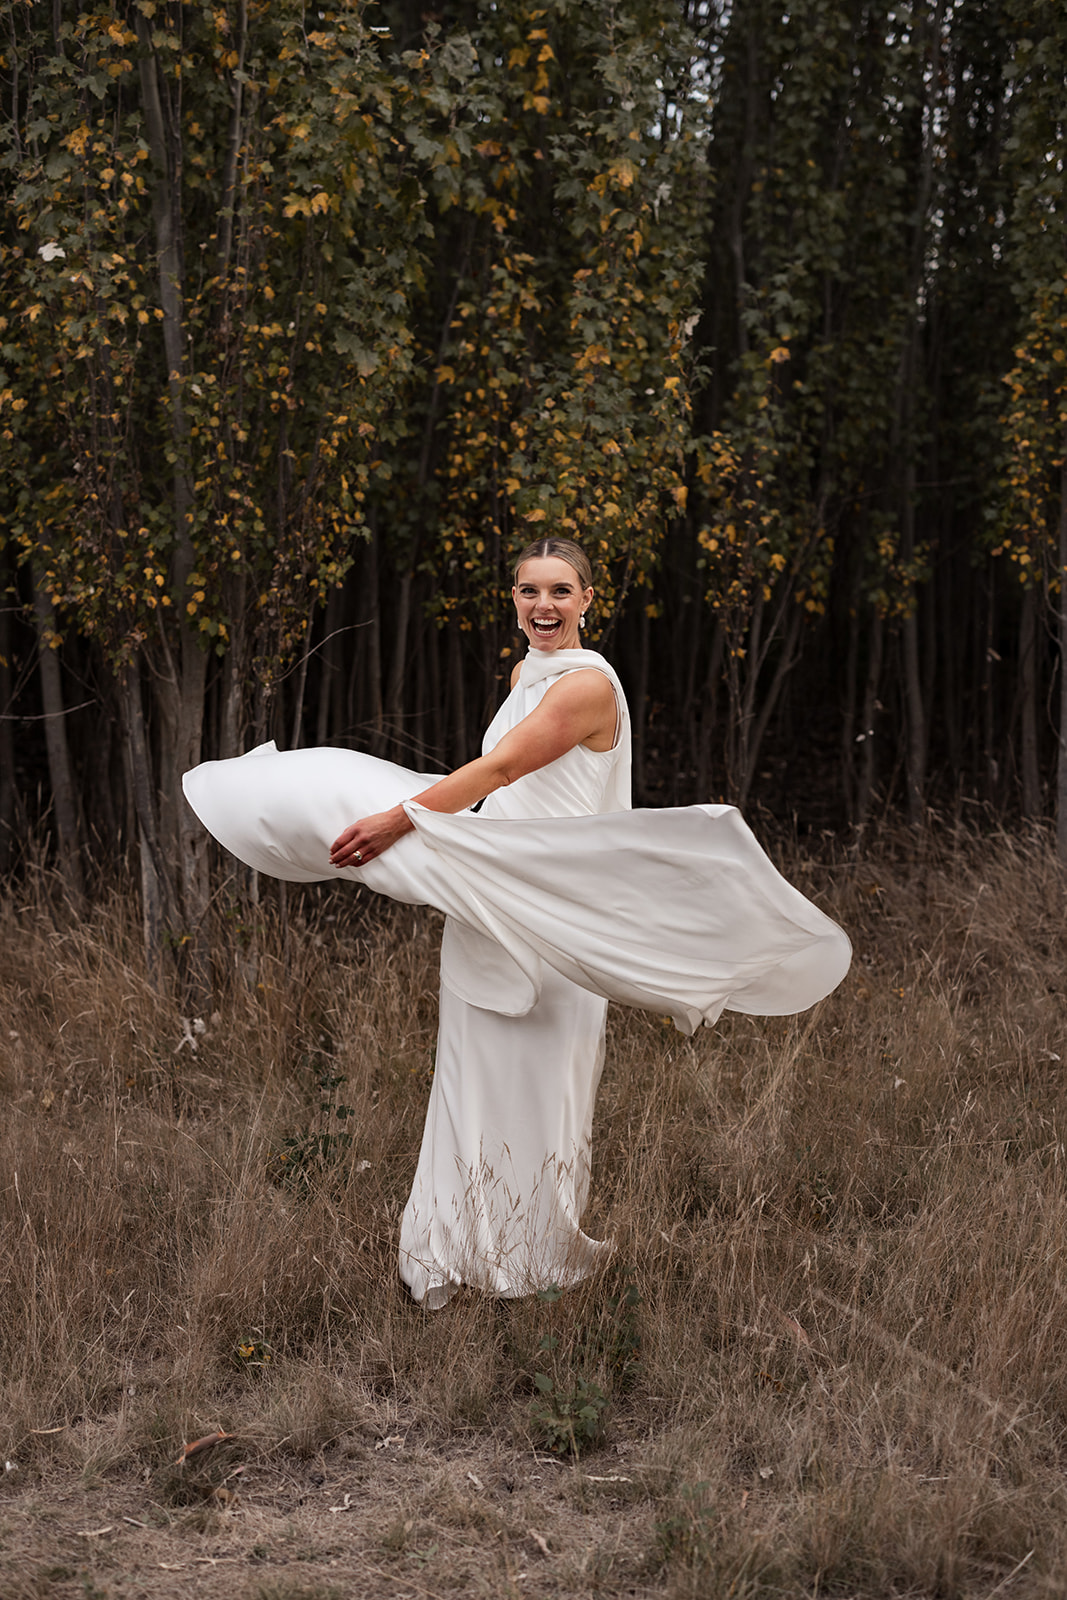 Bride twirling her dress